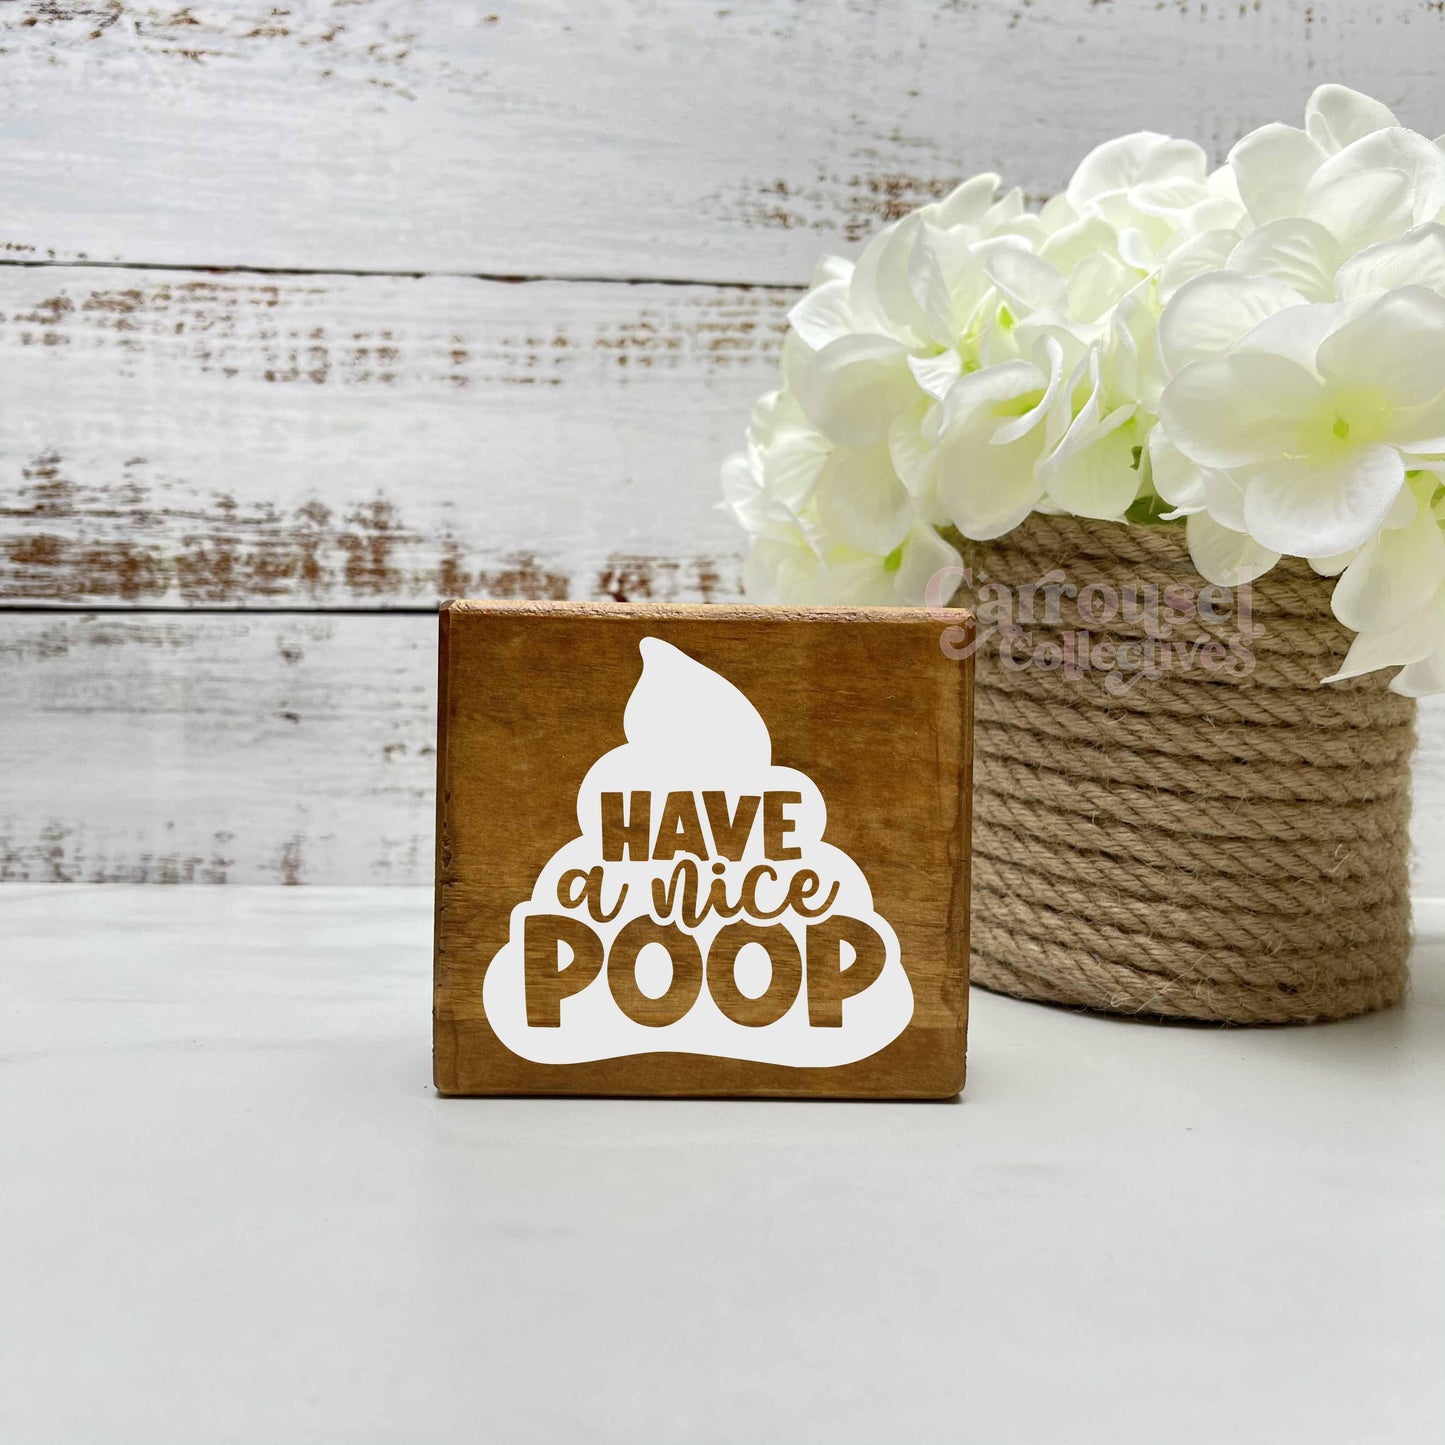 Have a nice poop, Bathroom Wood Sign, Bathroom Decor, Home Decor